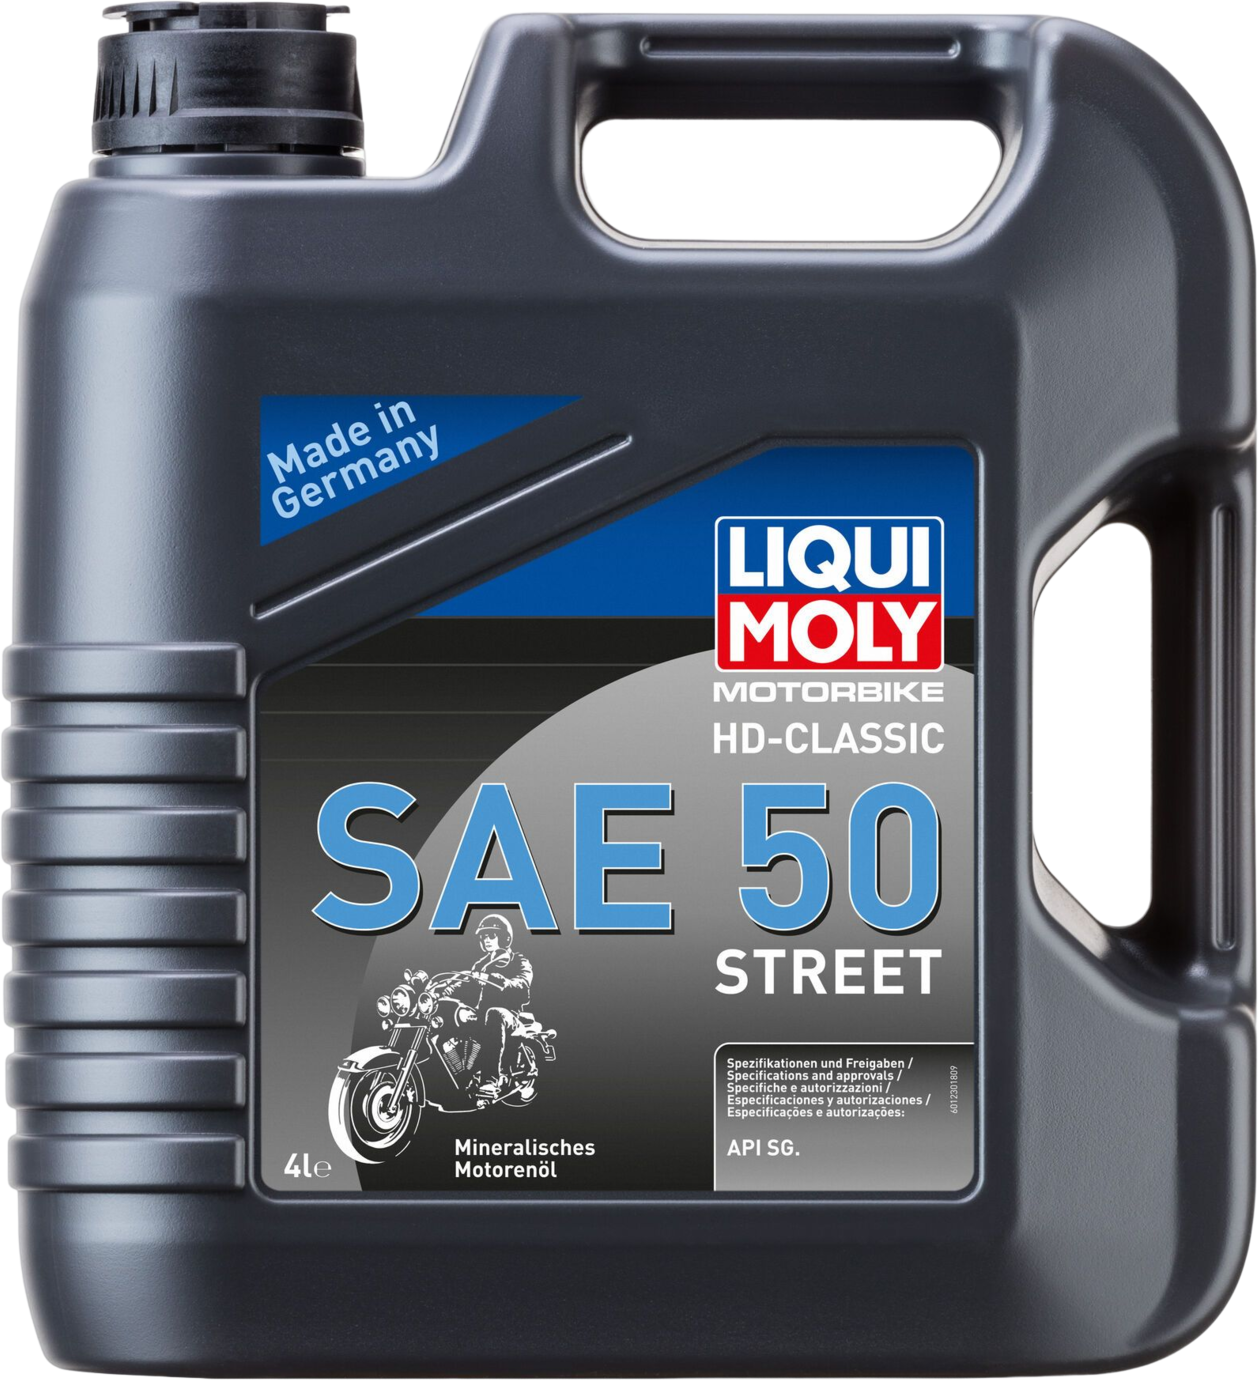 Liqui Moly Motorbike HD-Classic SAE 50 Street, 4 lt